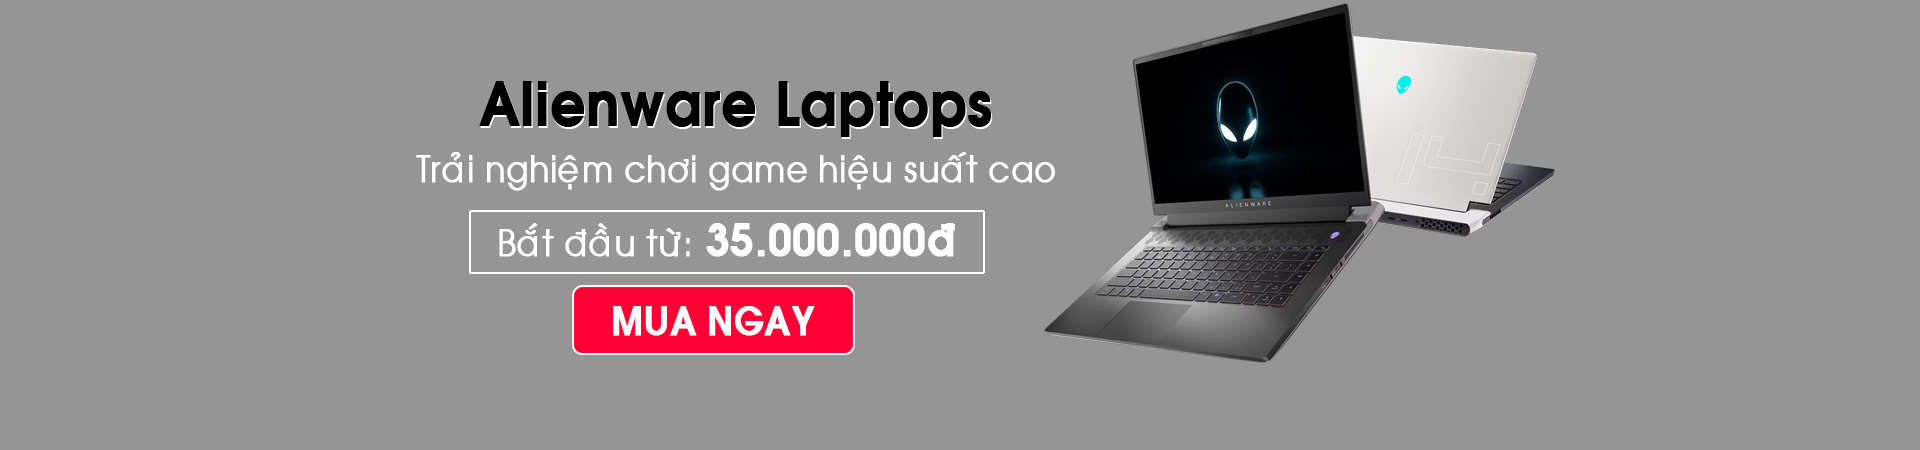 dell-alienware-laptop